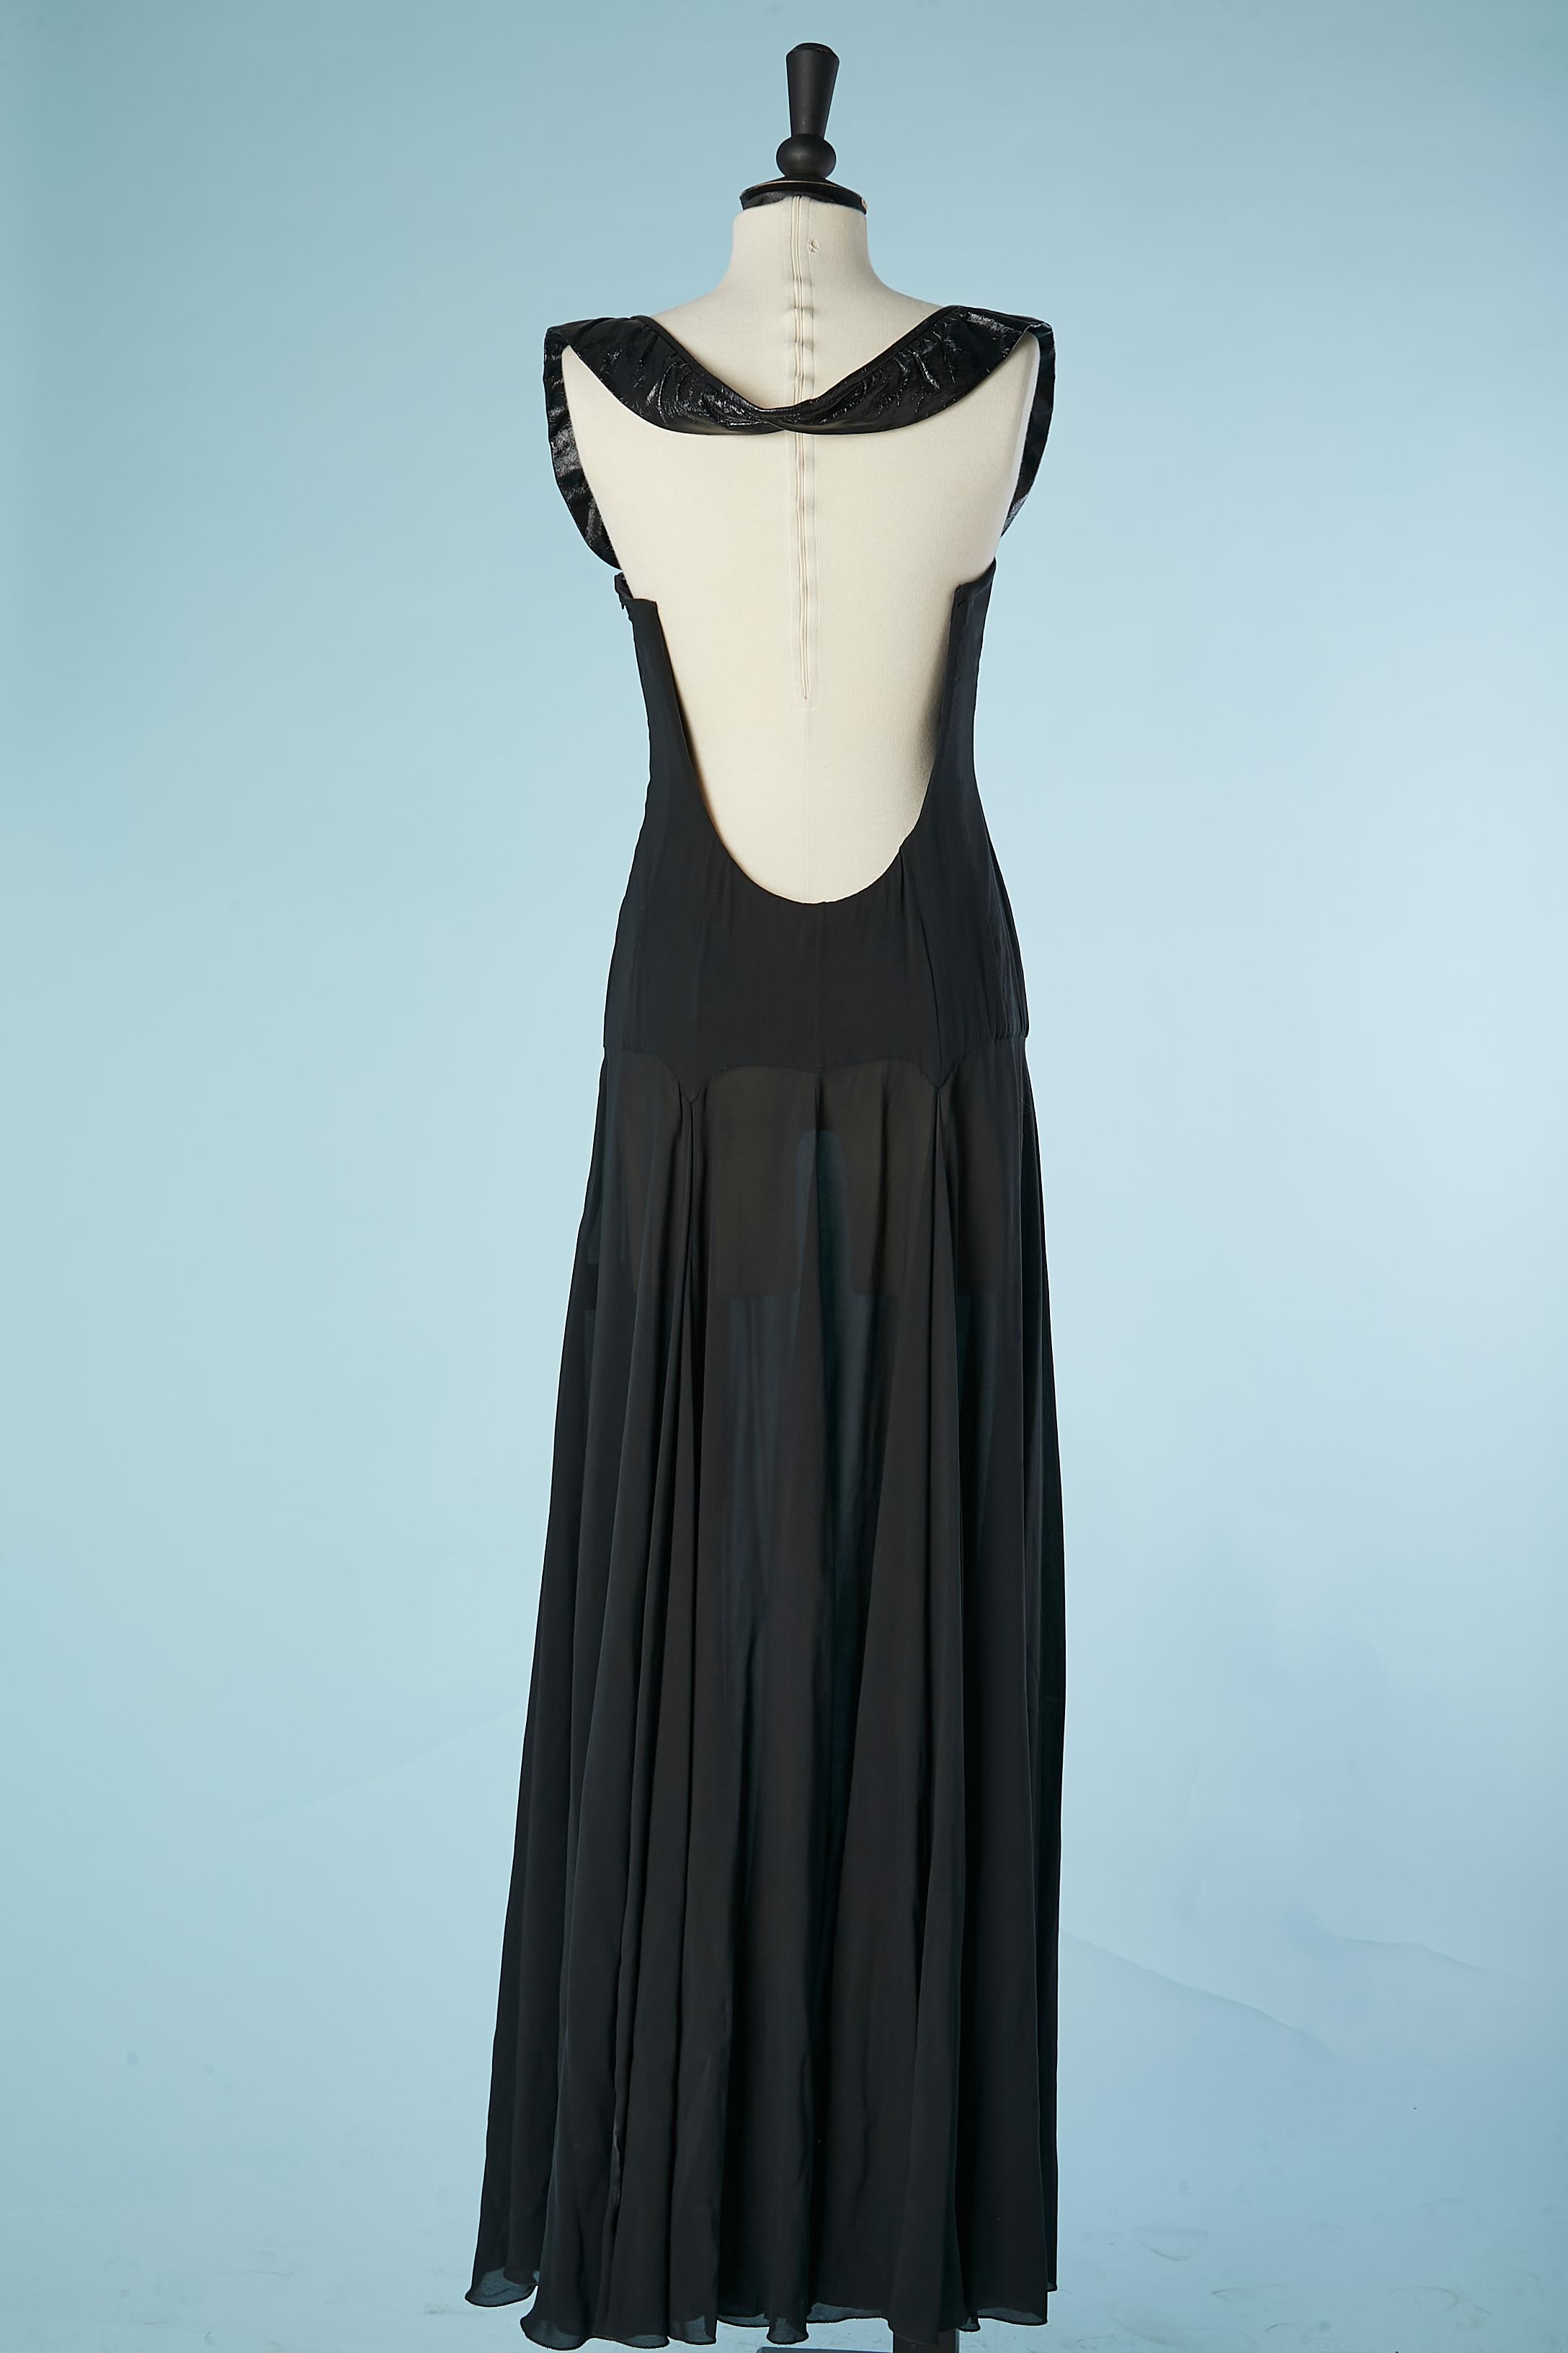 Black backless evening dress with patent leather collar Jasmine Di Milo Universe 1